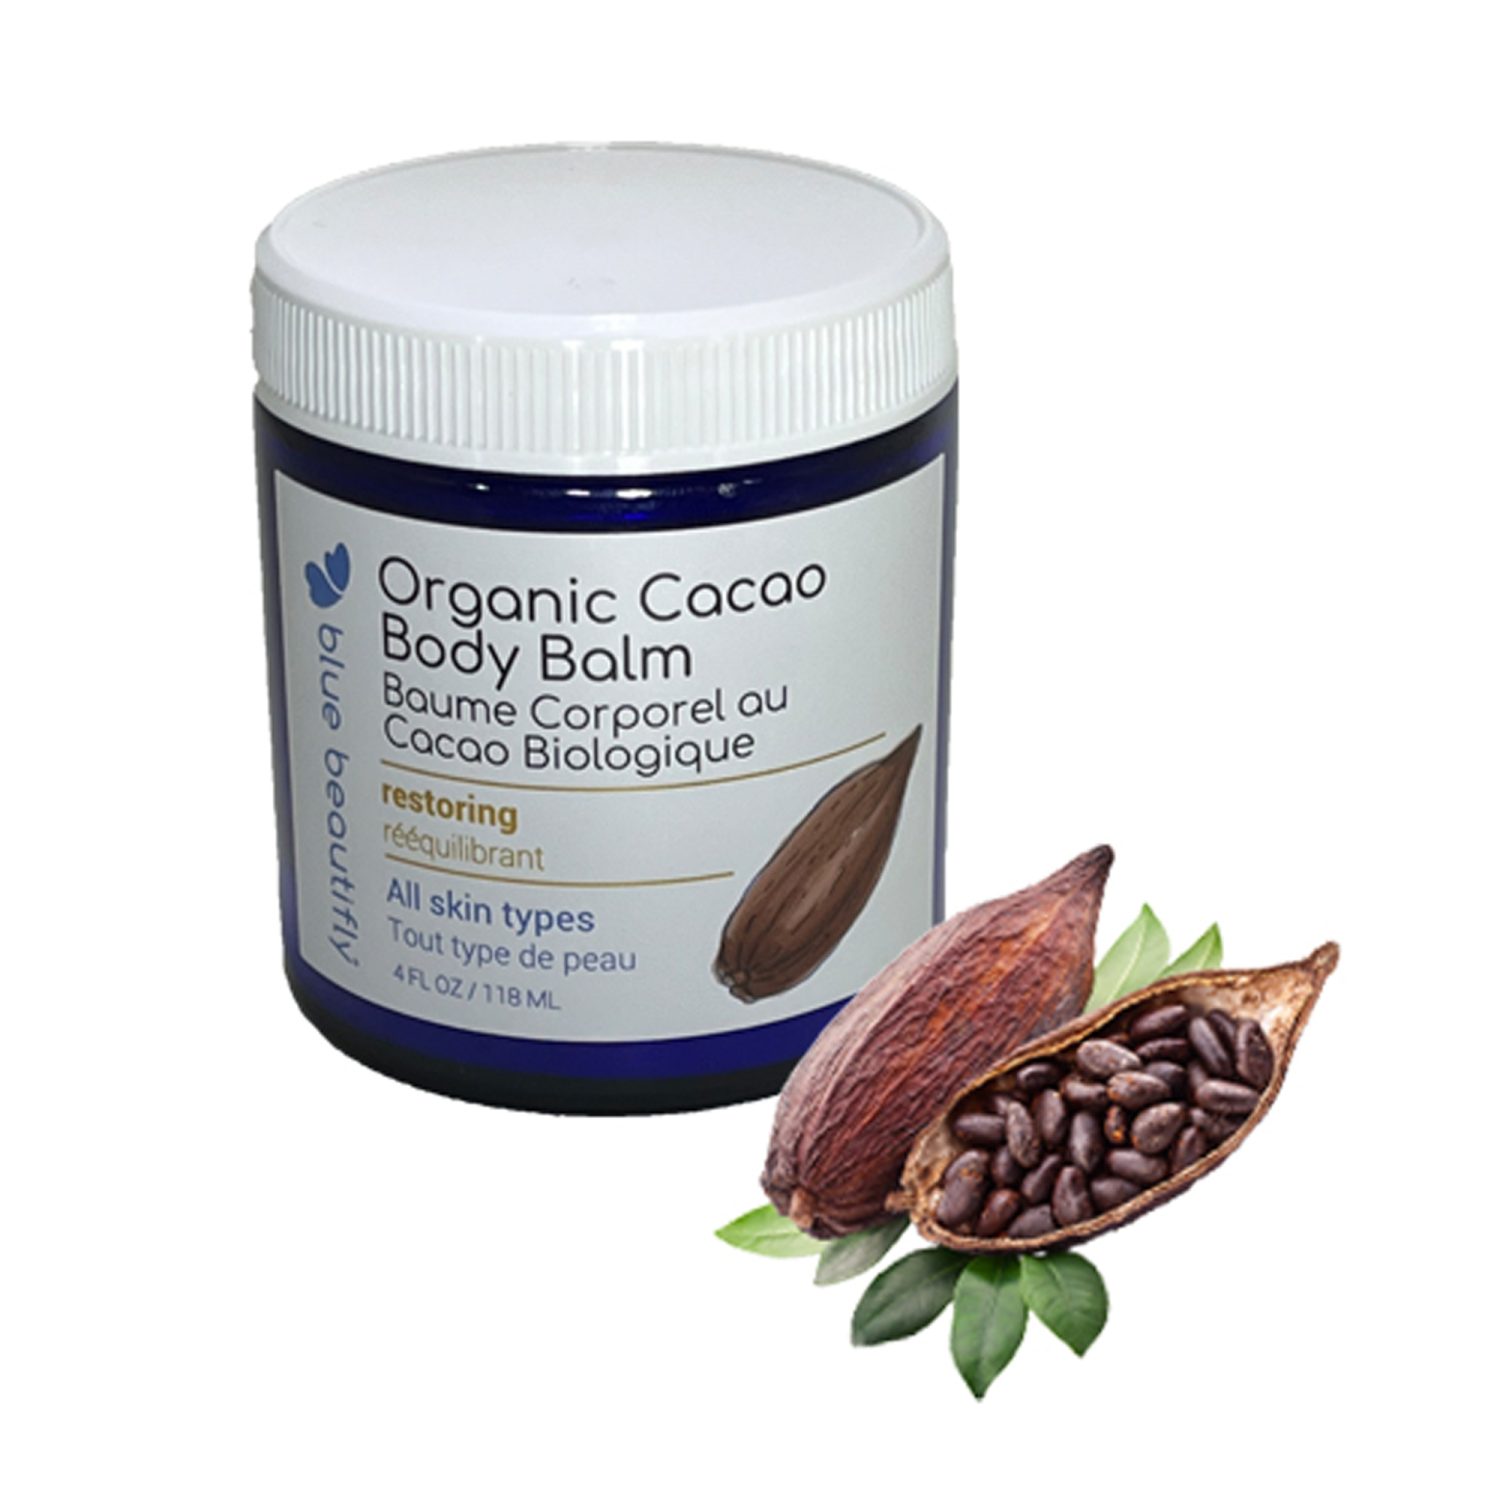 Organic Cacao Body Balm